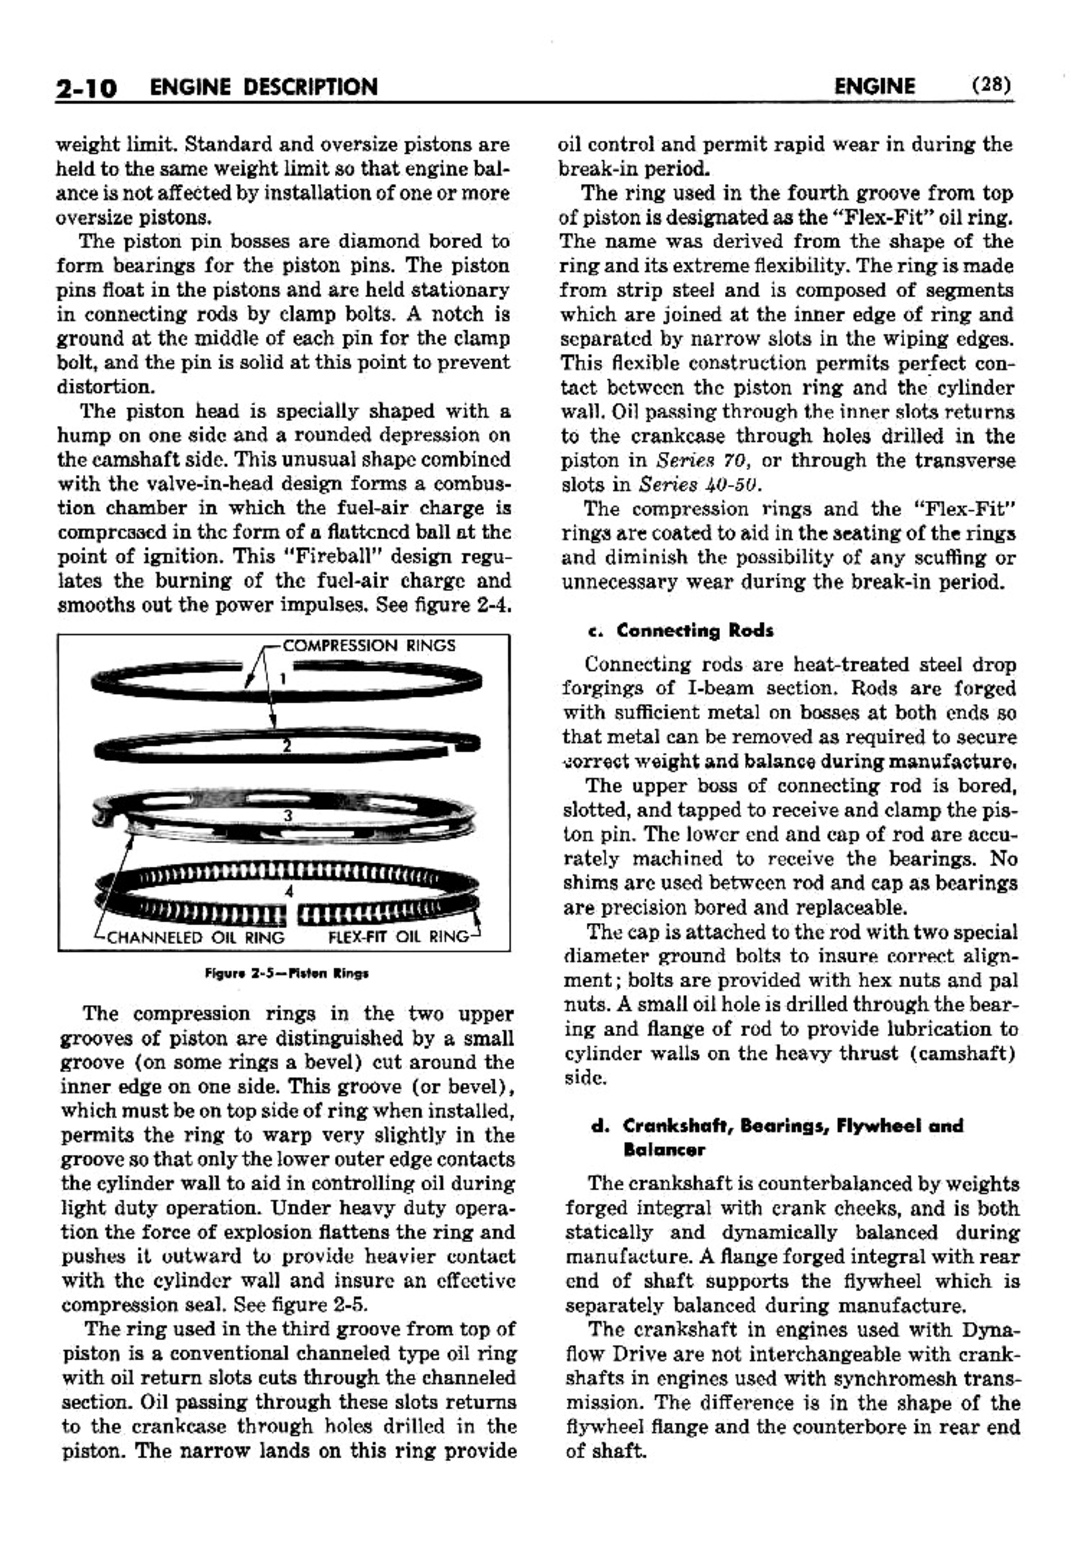 n_03 1952 Buick Shop Manual - Engine-010-010.jpg